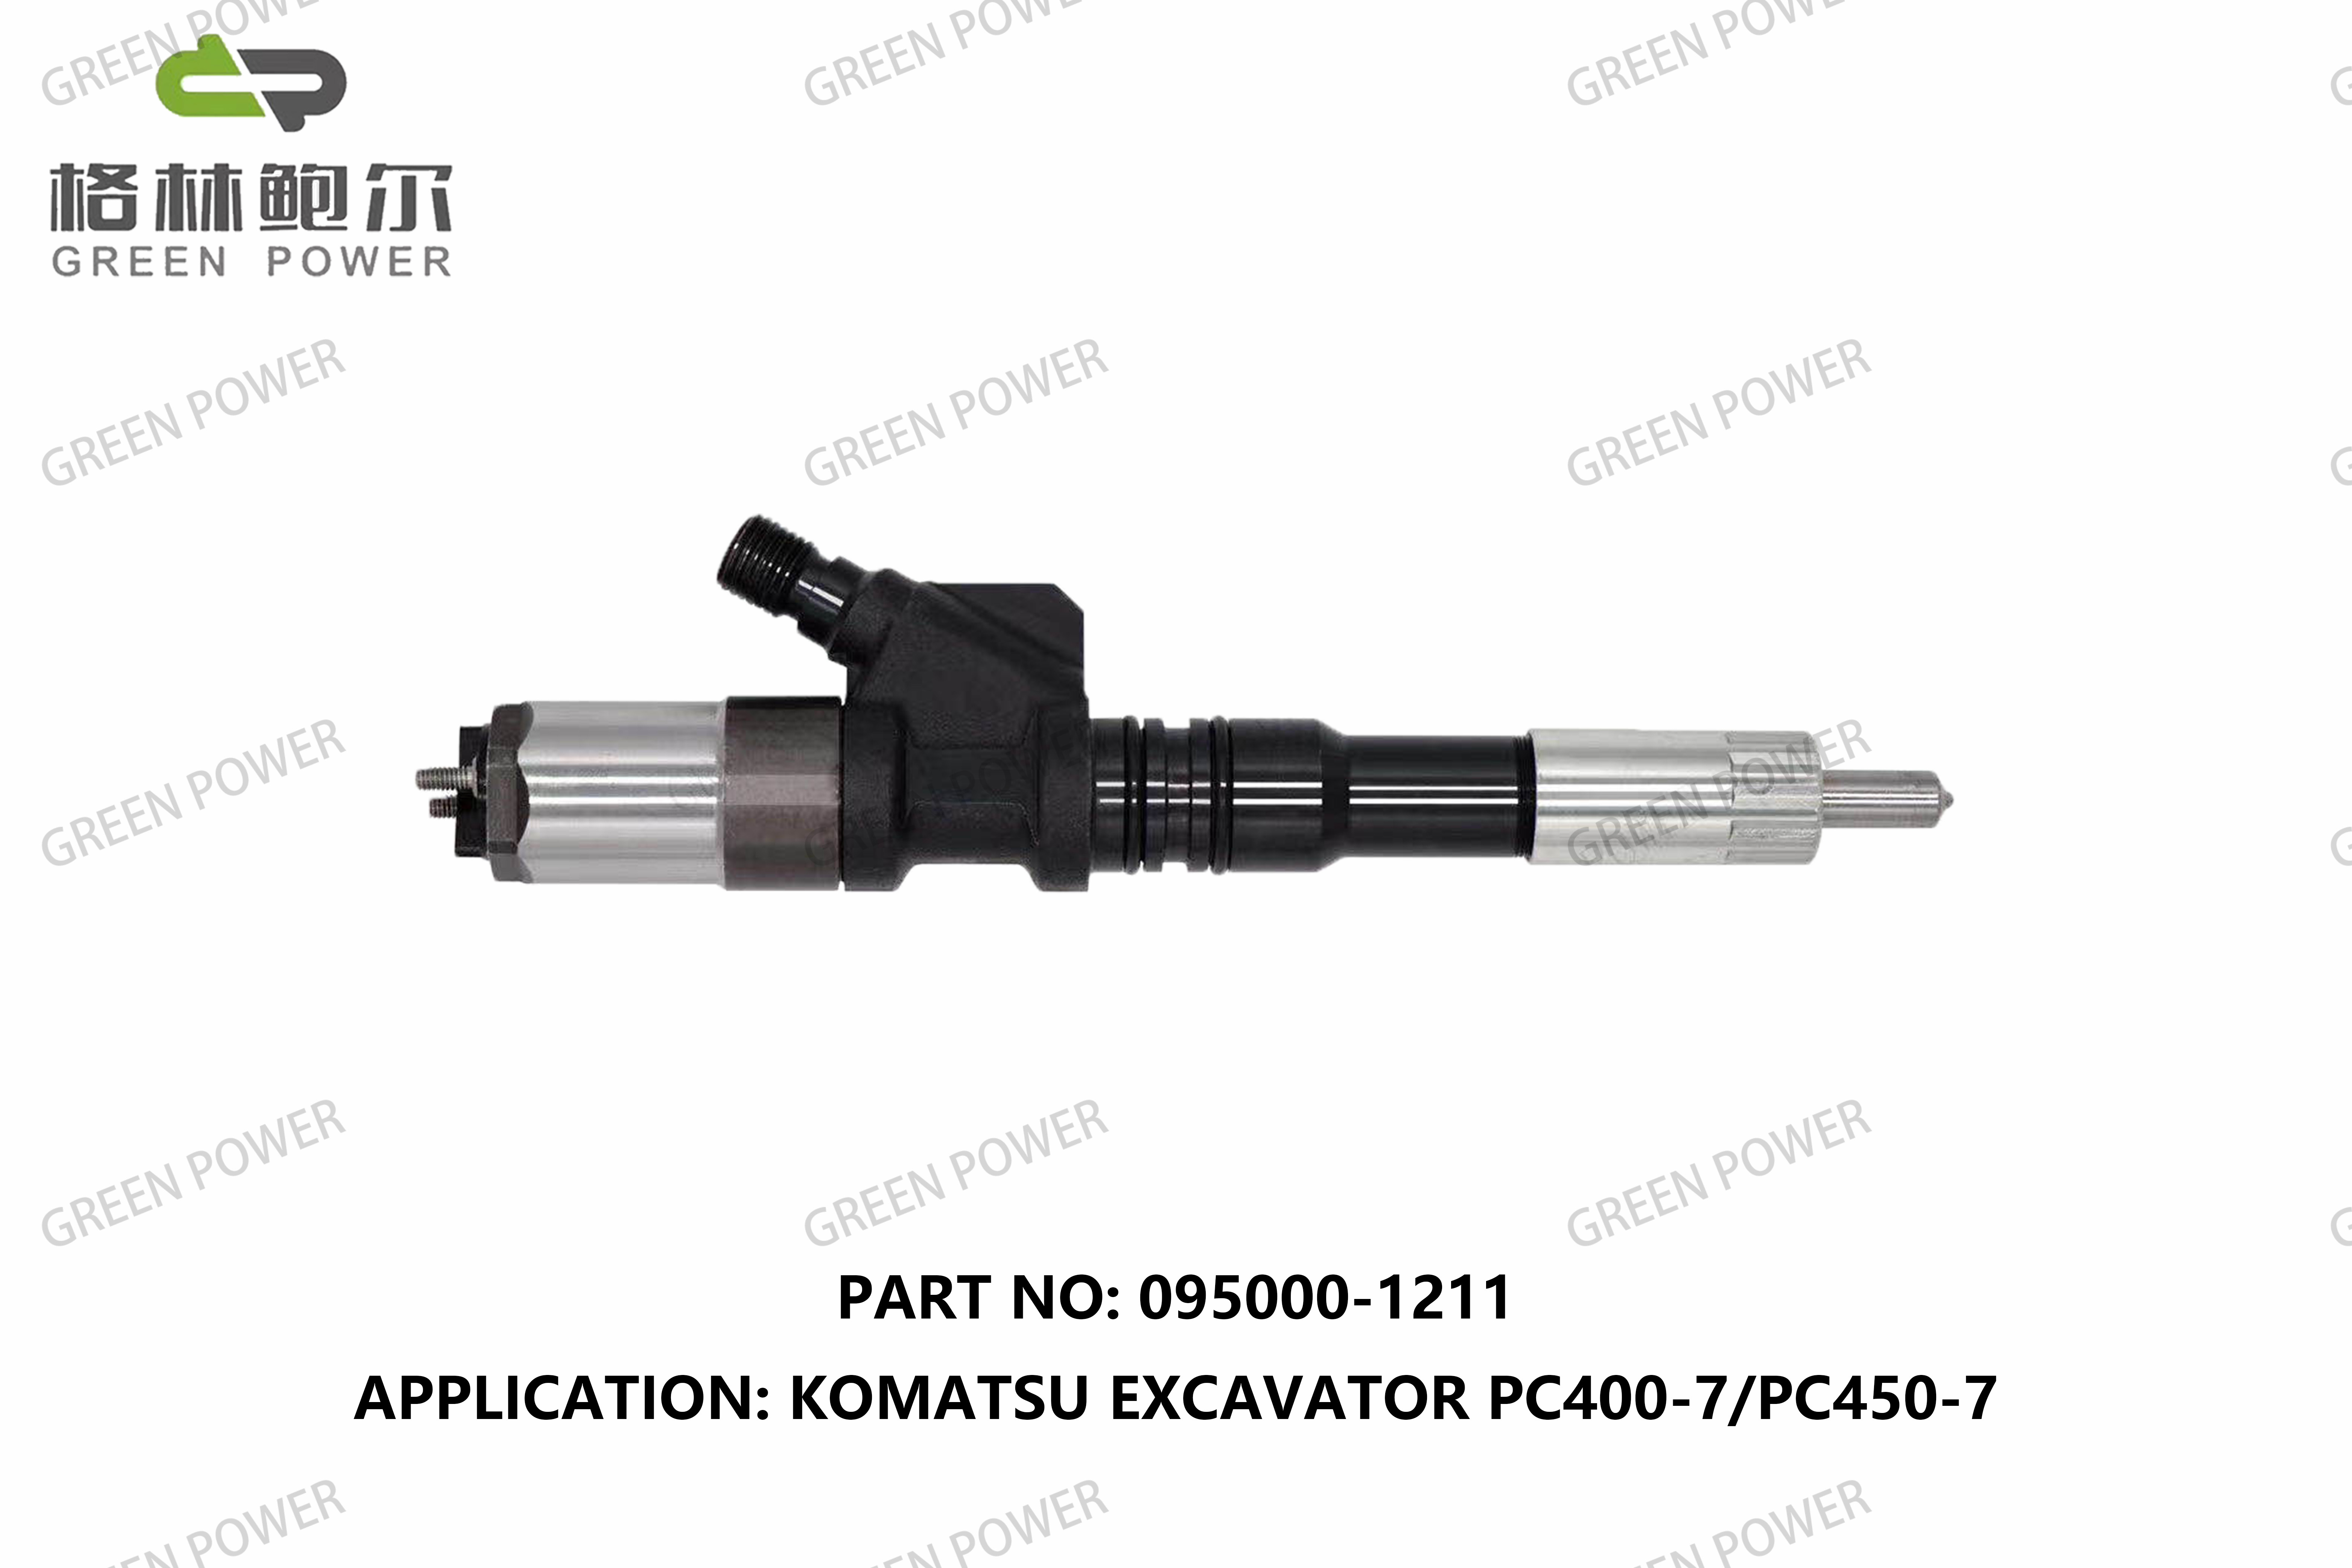 095000-1211 for Komatsu S6D125 Excavator PC450-7 PC400-7 PC-7